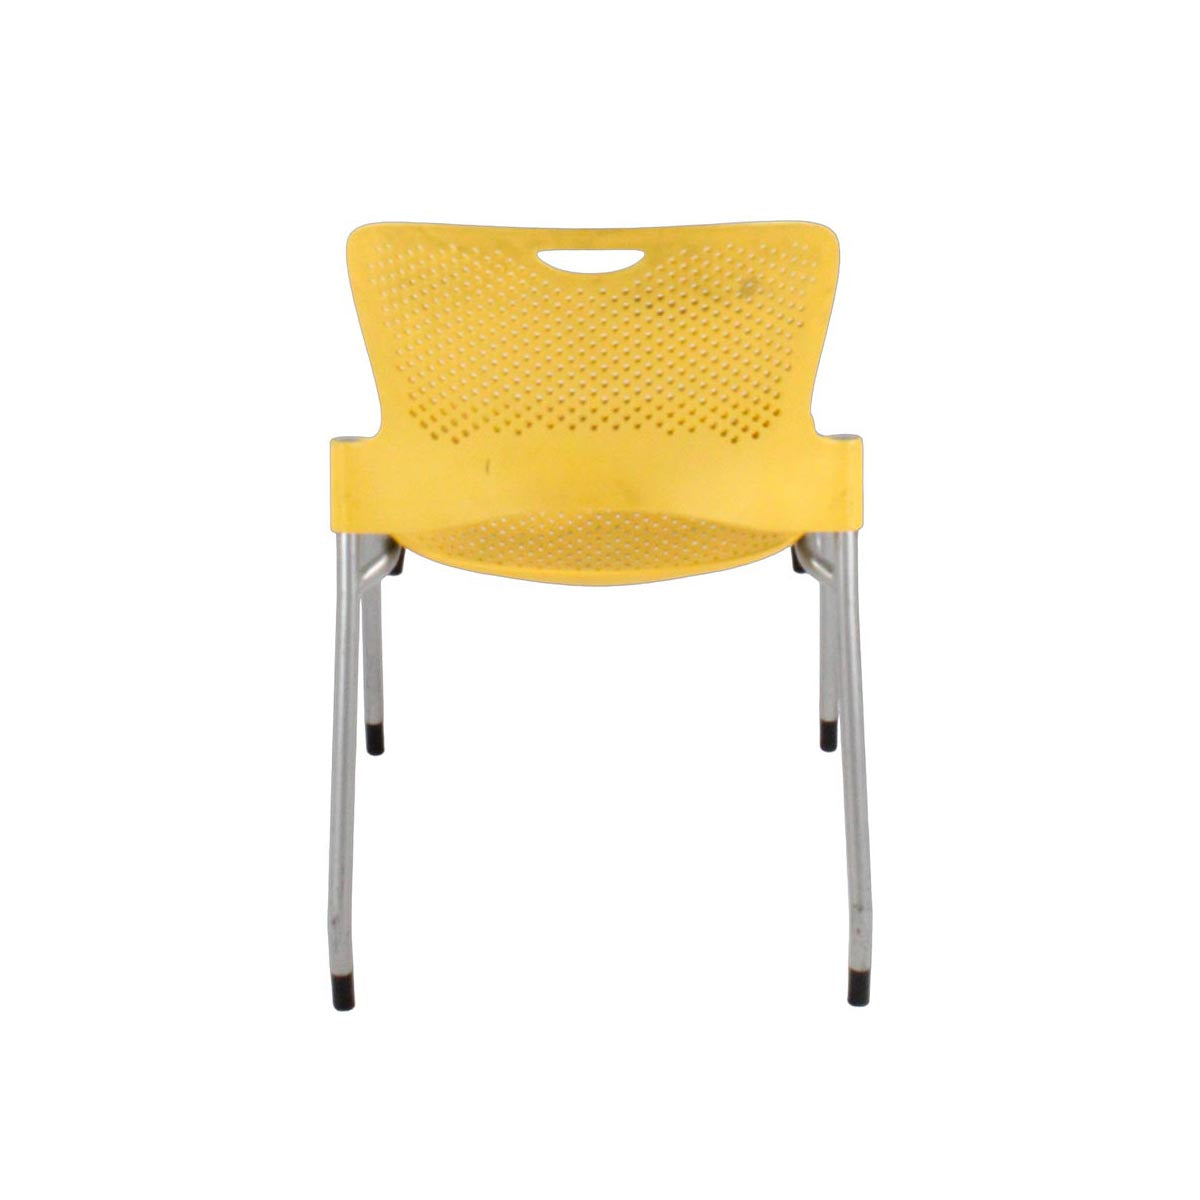 Herman Miller: Caper Chair in Yellow - Refurbished